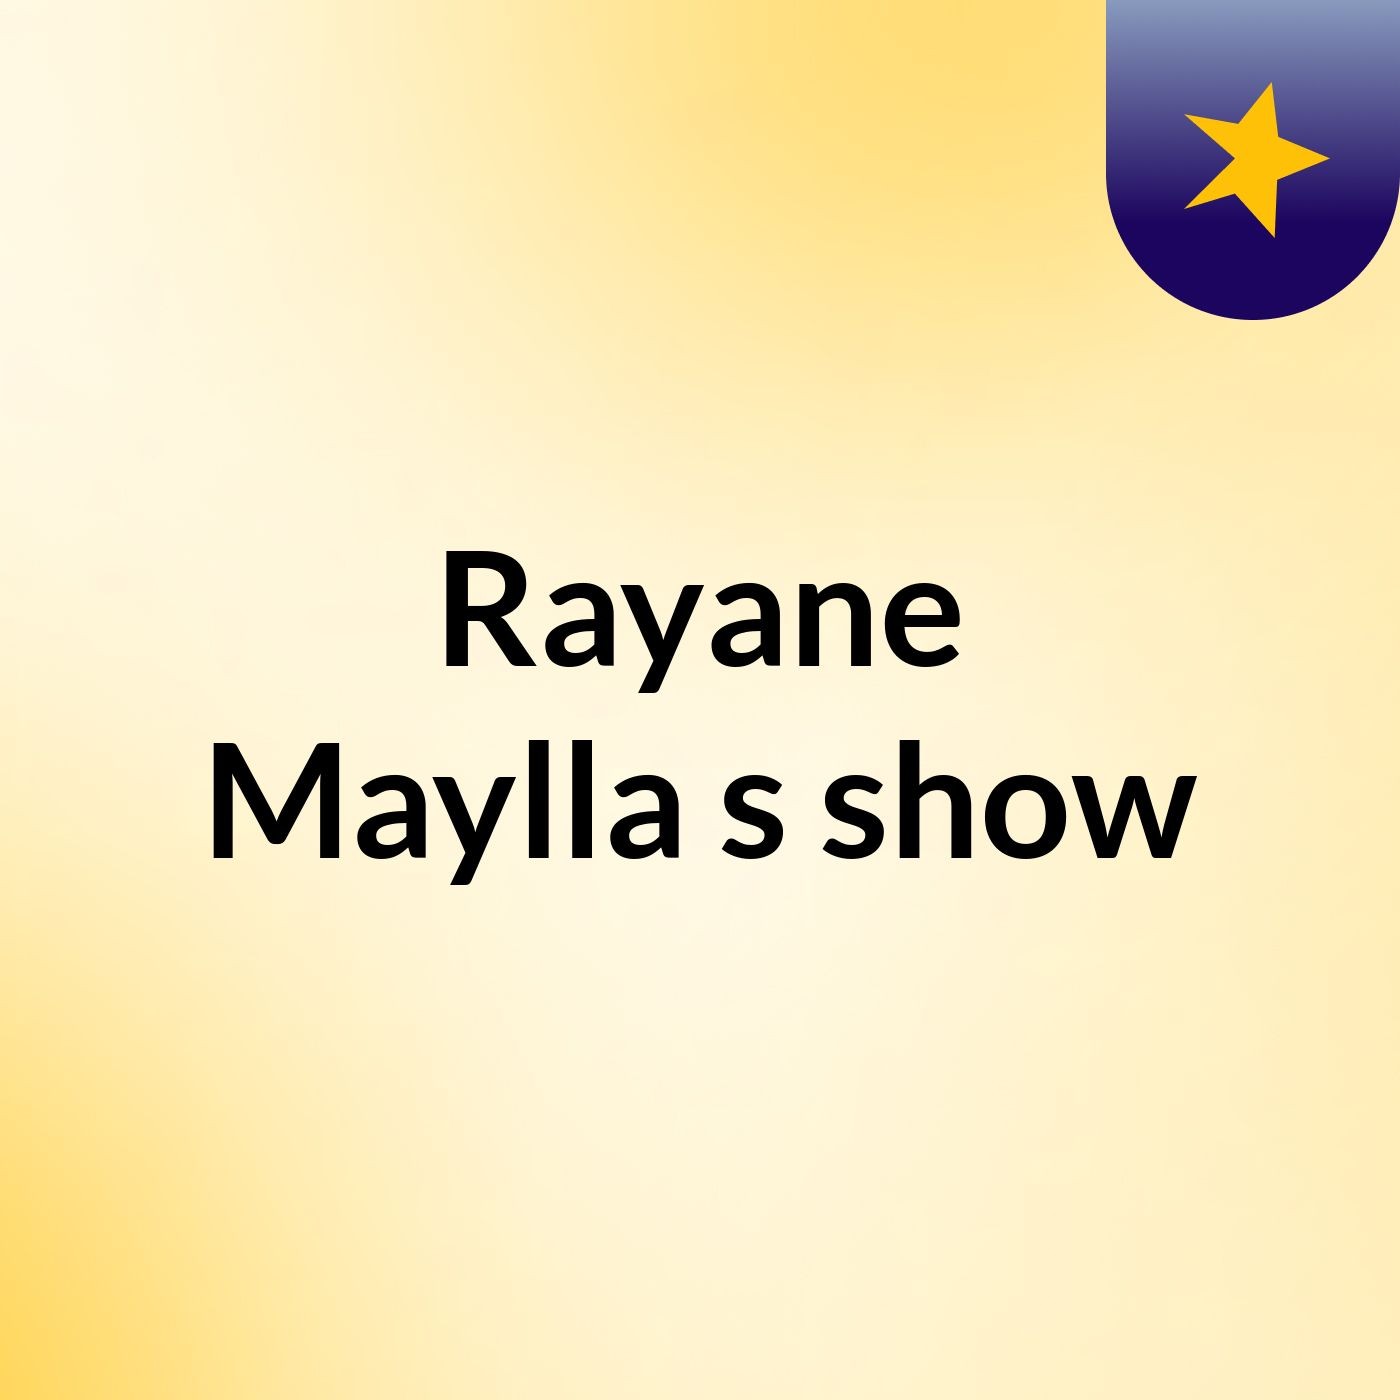 Rayane Maylla's show